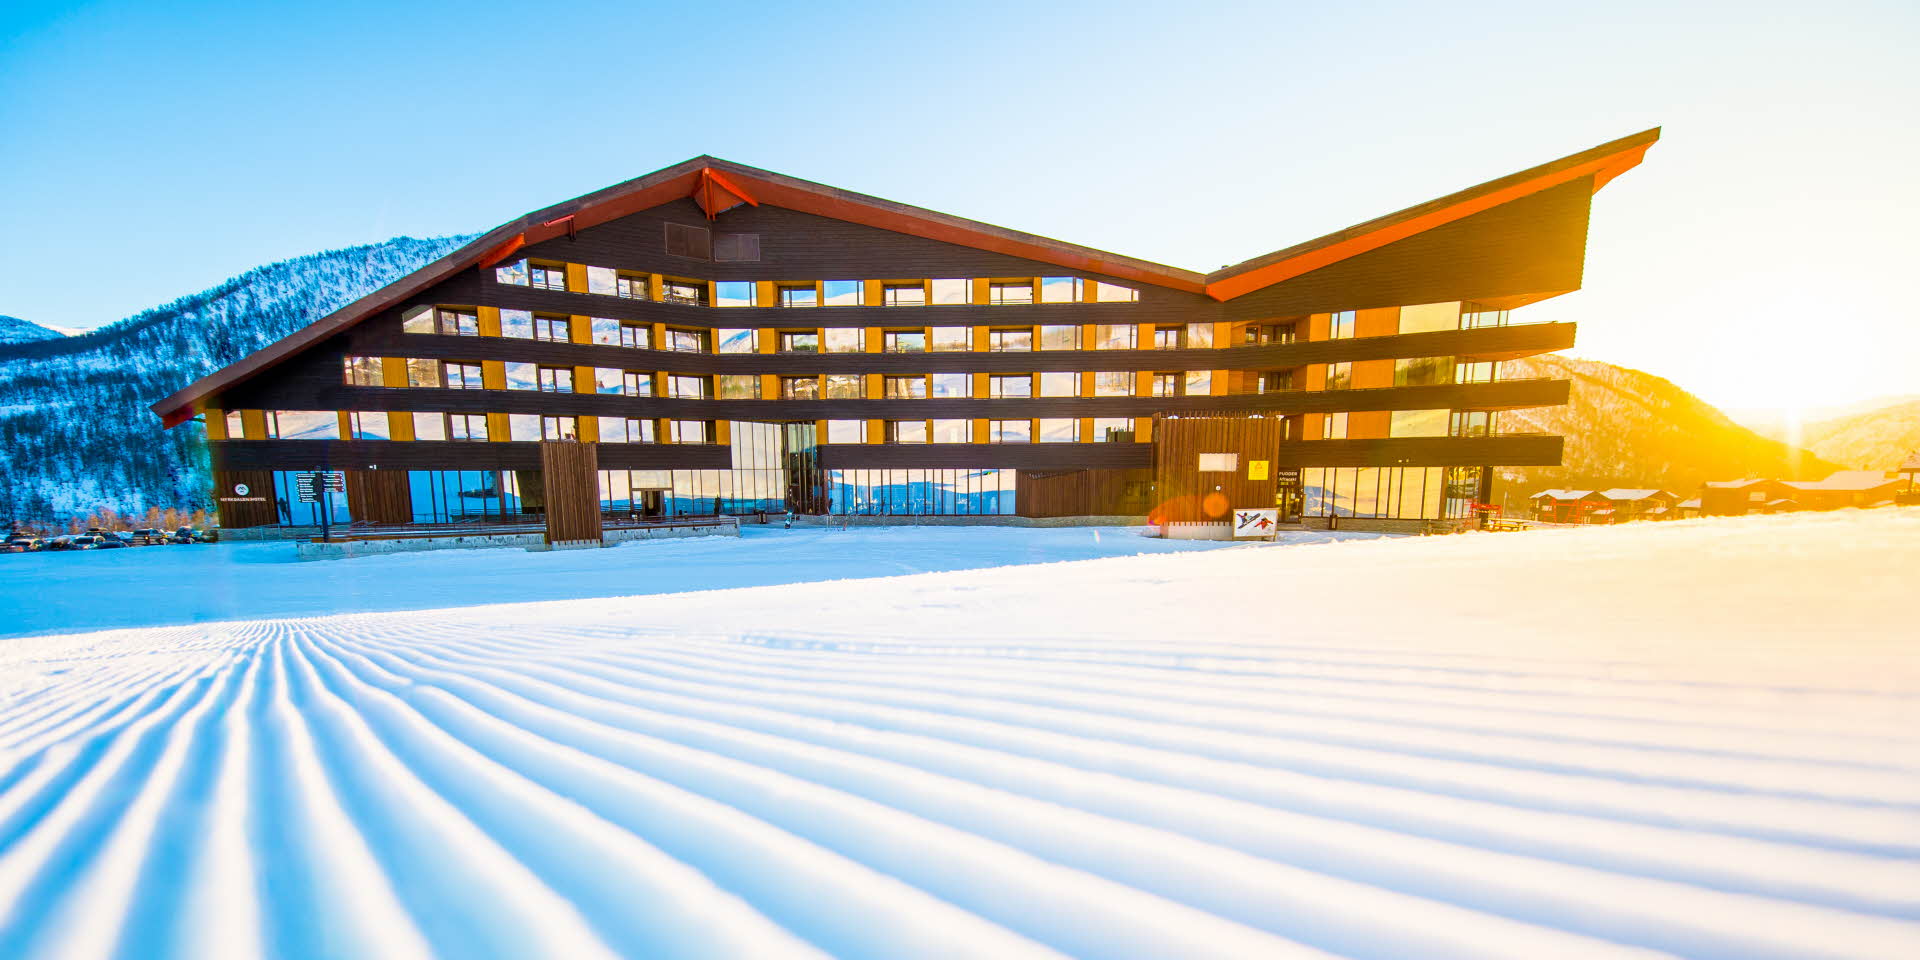 myrkdalen hotel norway